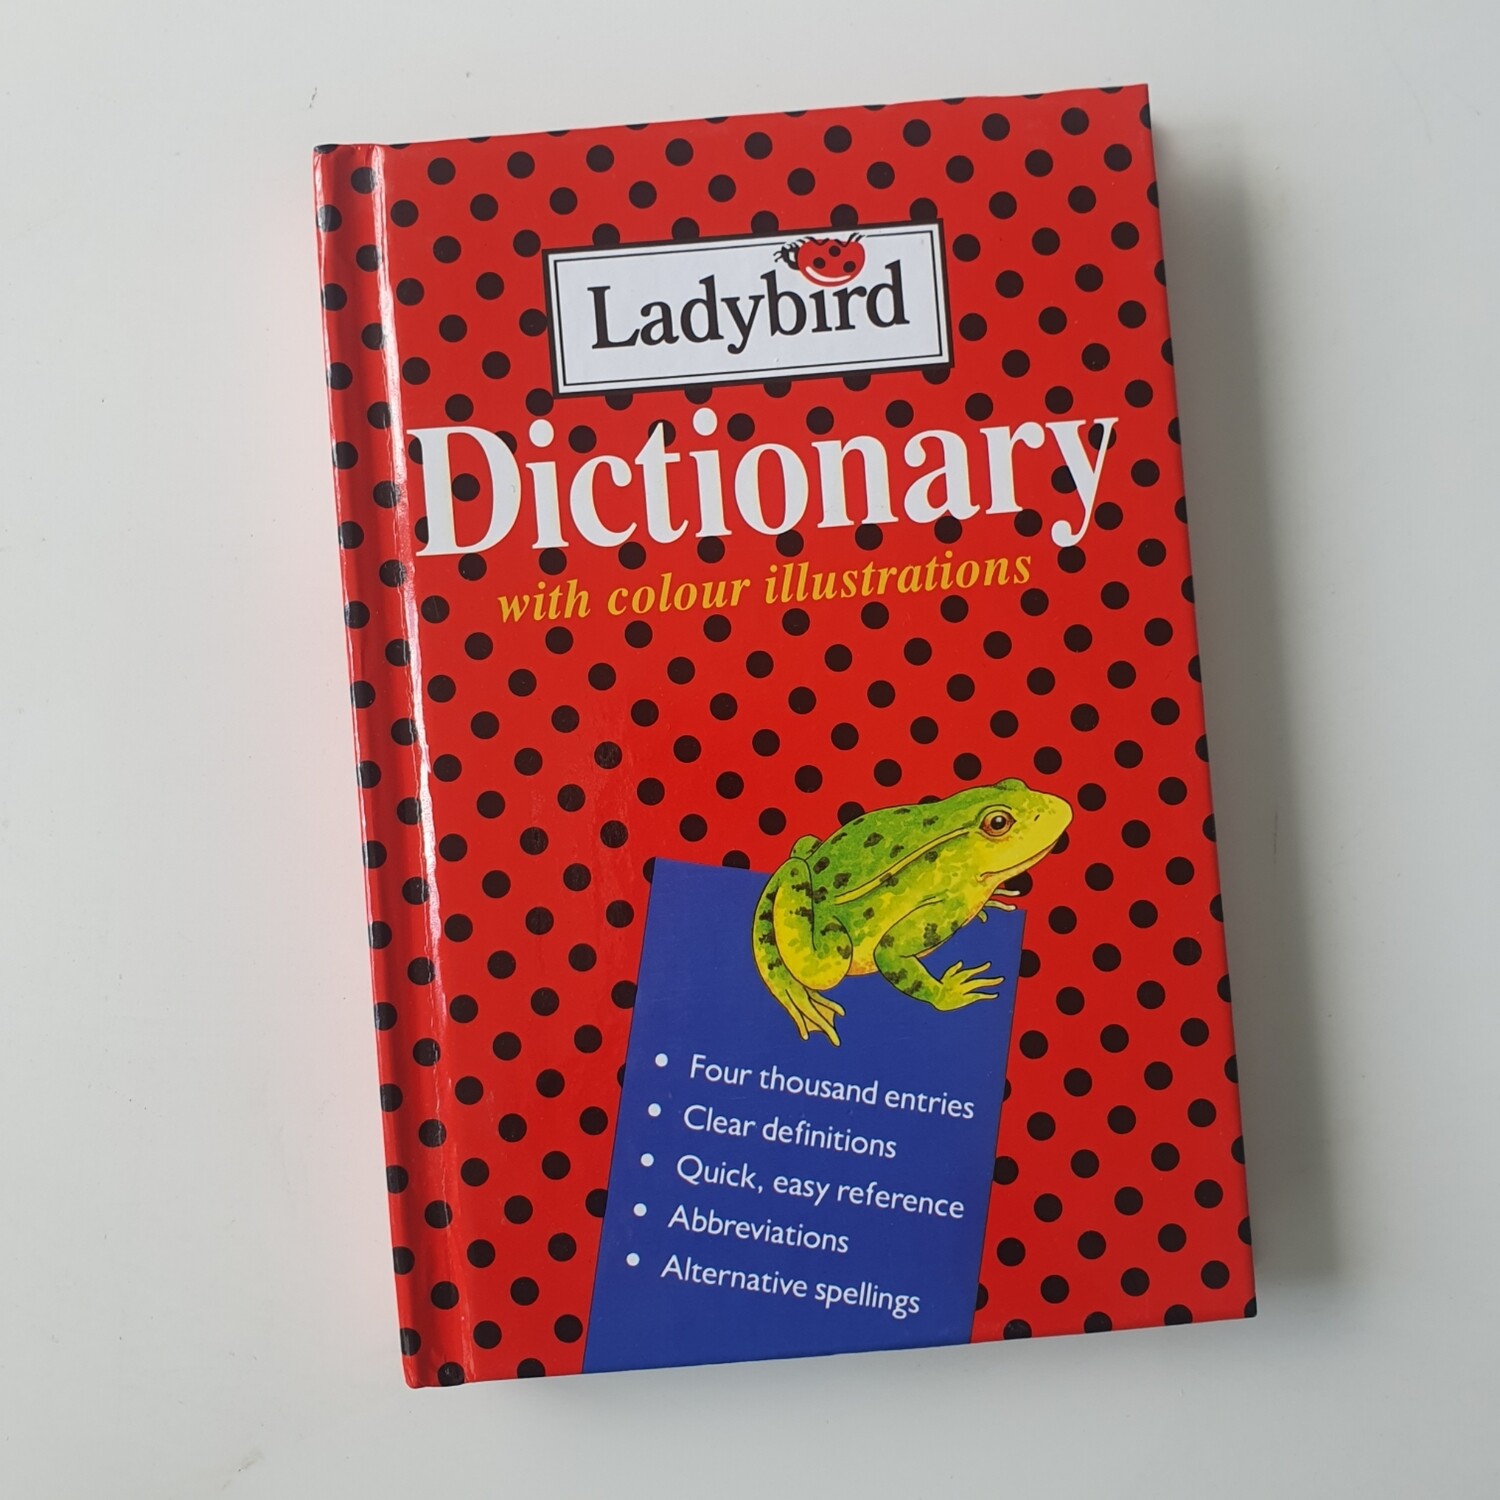 Dictionary Ladybird book